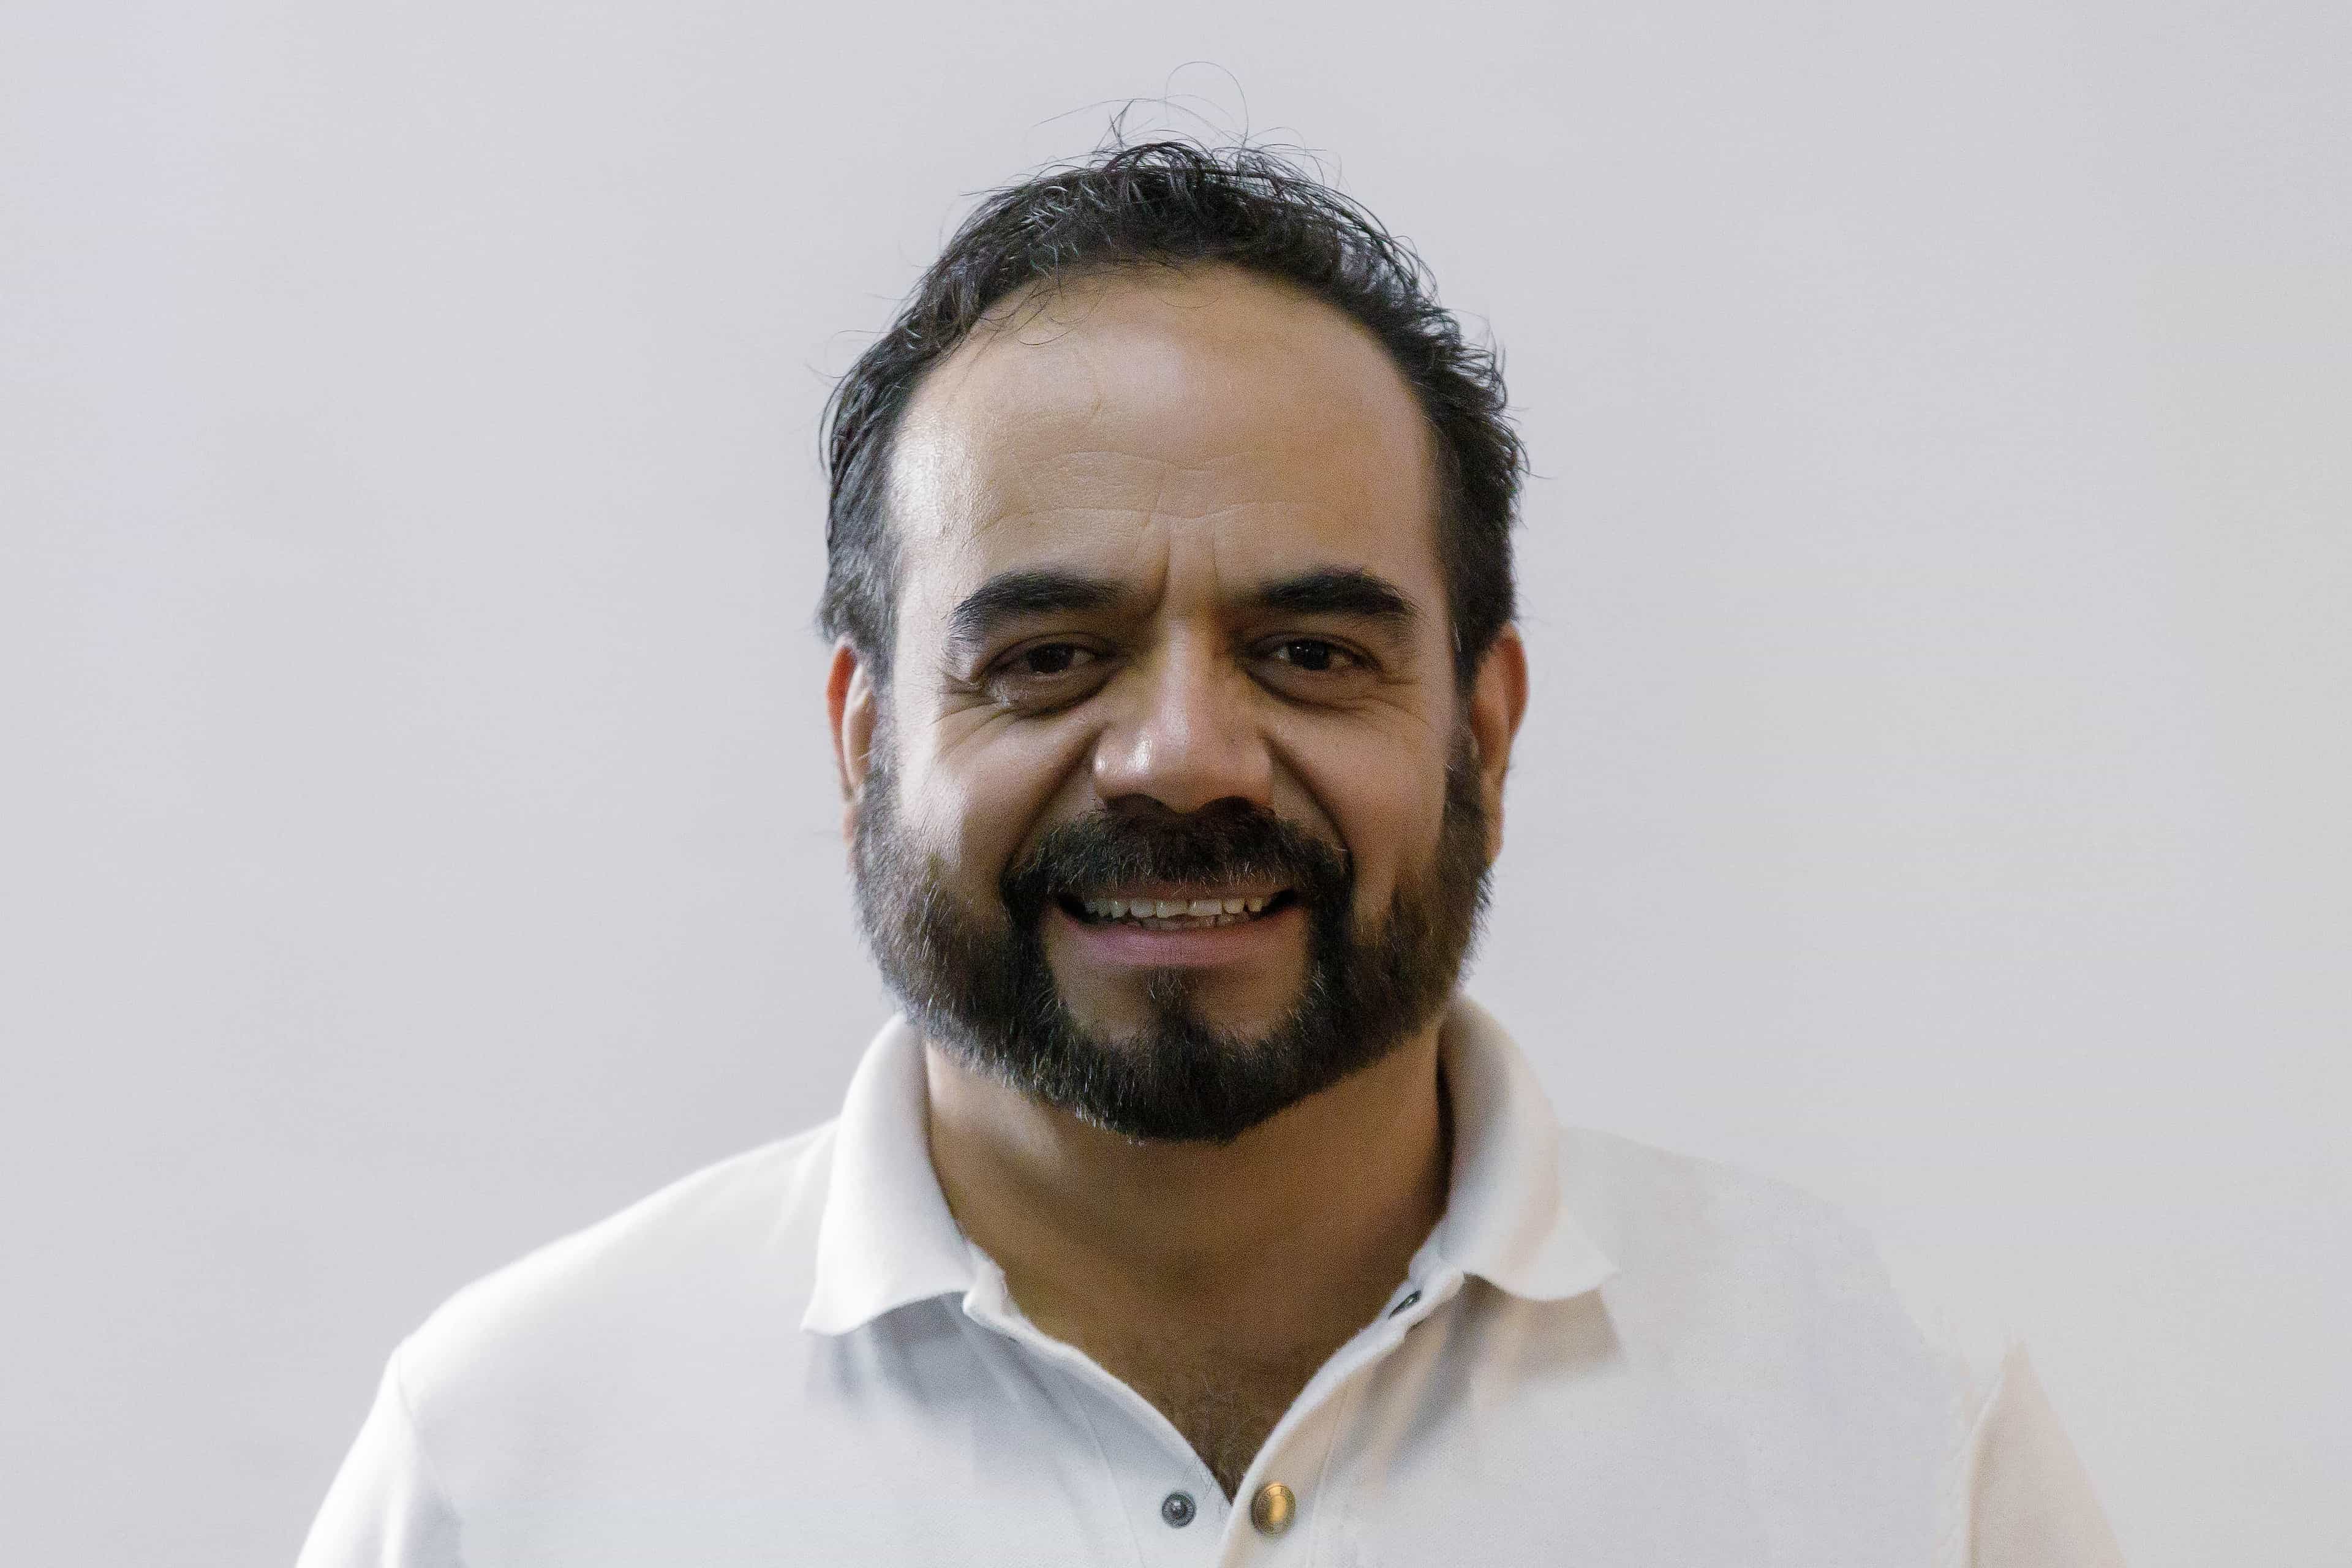 C. Alfonso Villareal Venegas